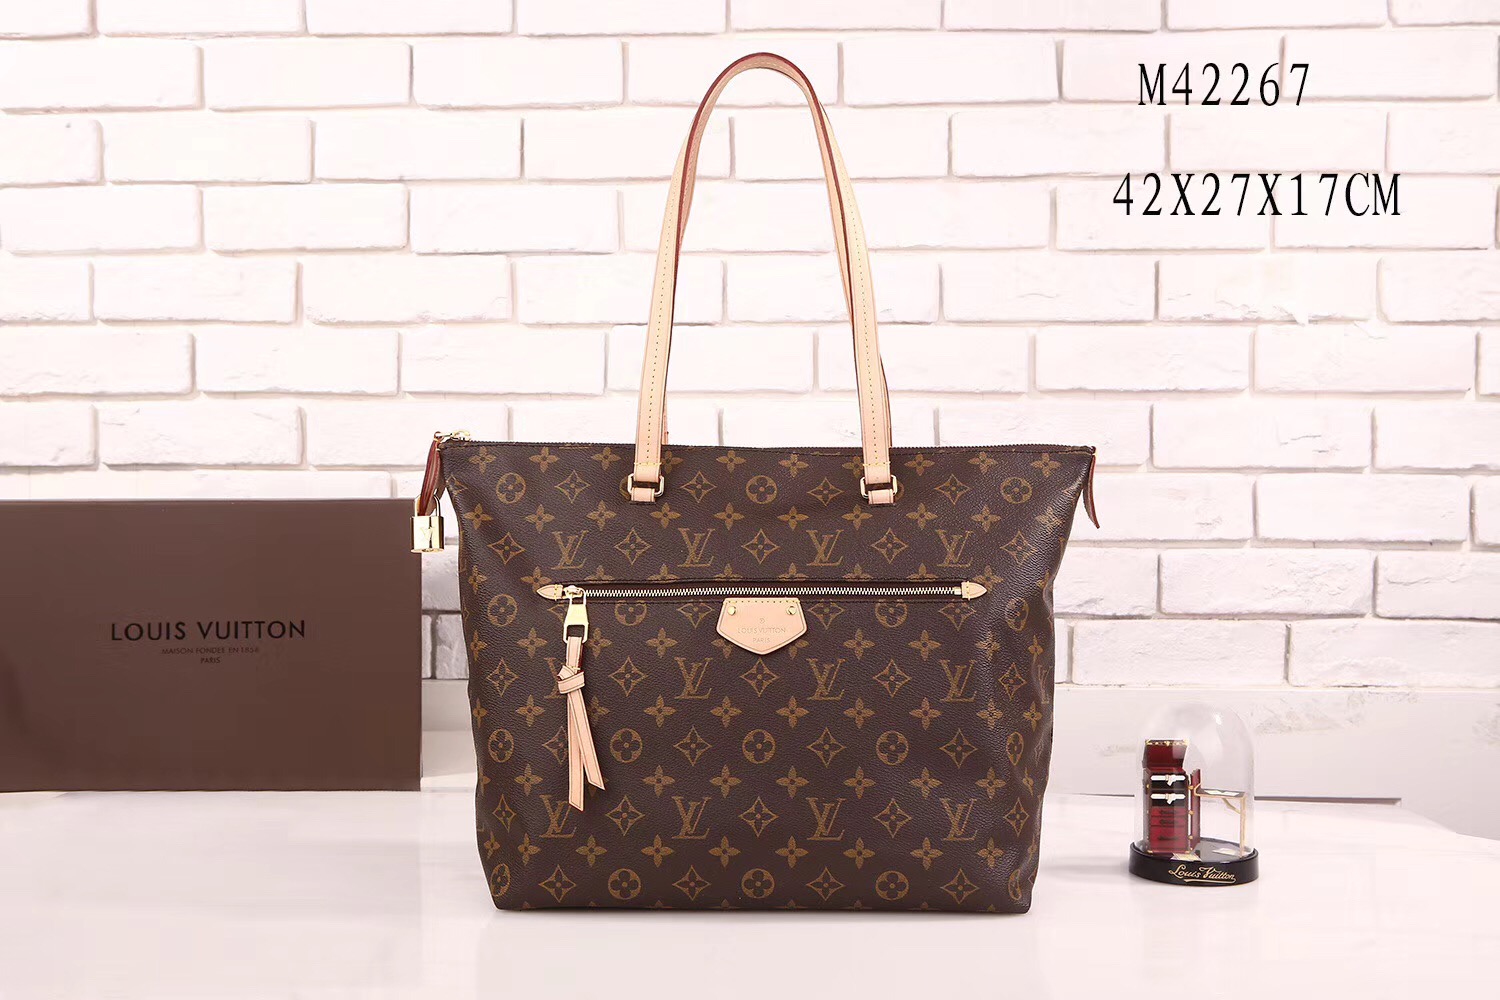 LV Louis Vuitton Iena Monogram bags M42267 Handbags Brown